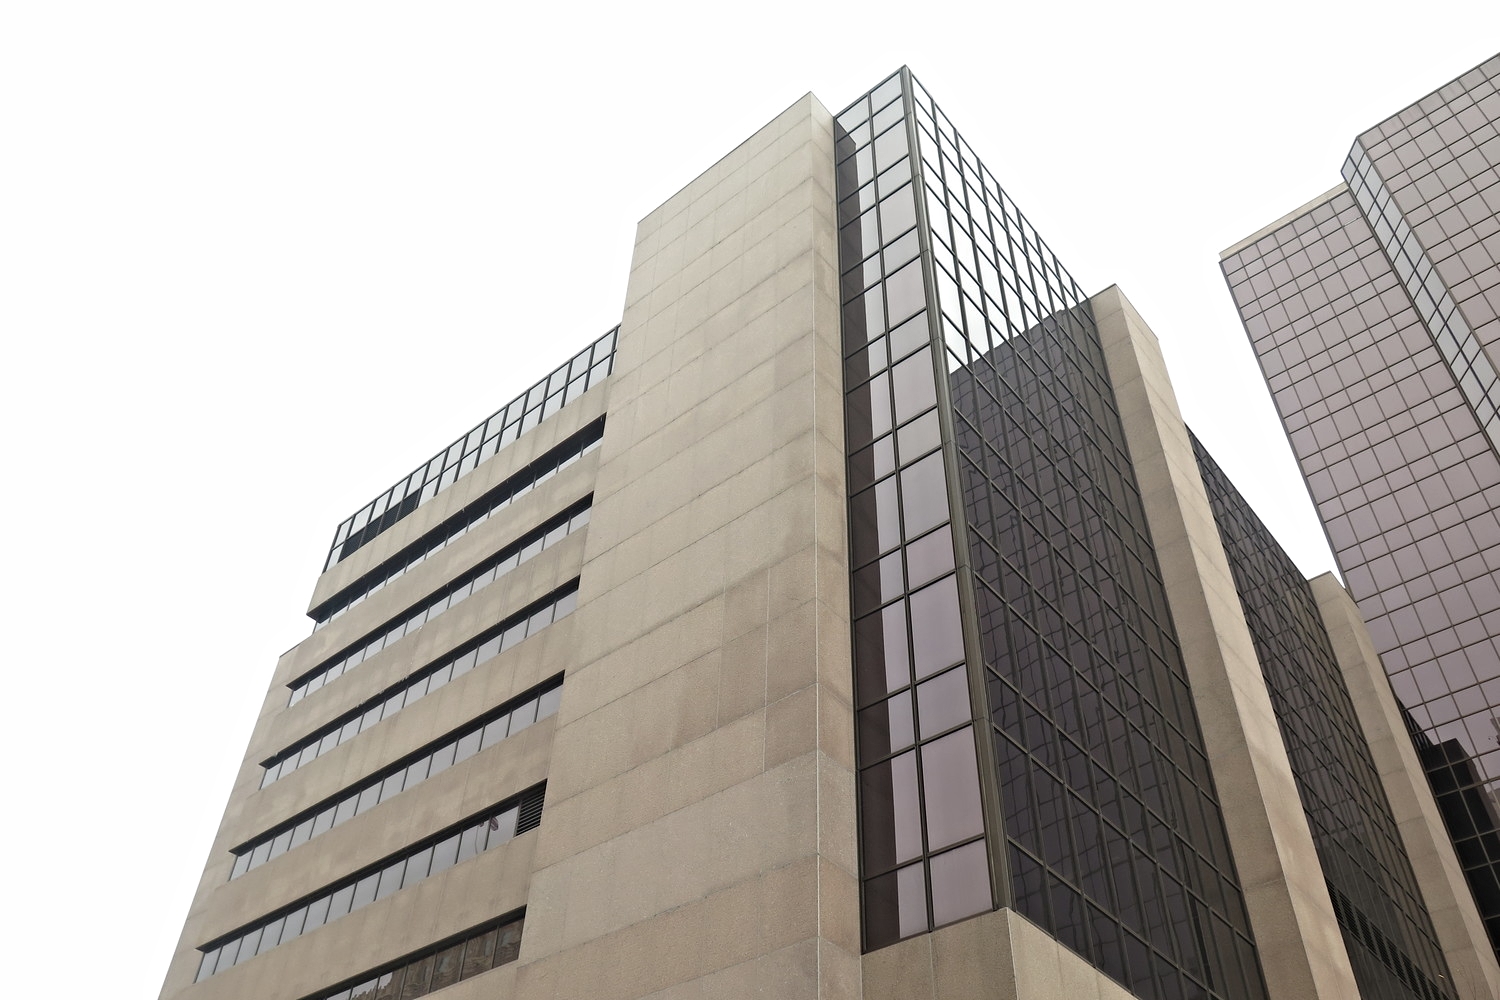 4. Hilton Building (Mayo Clinic)